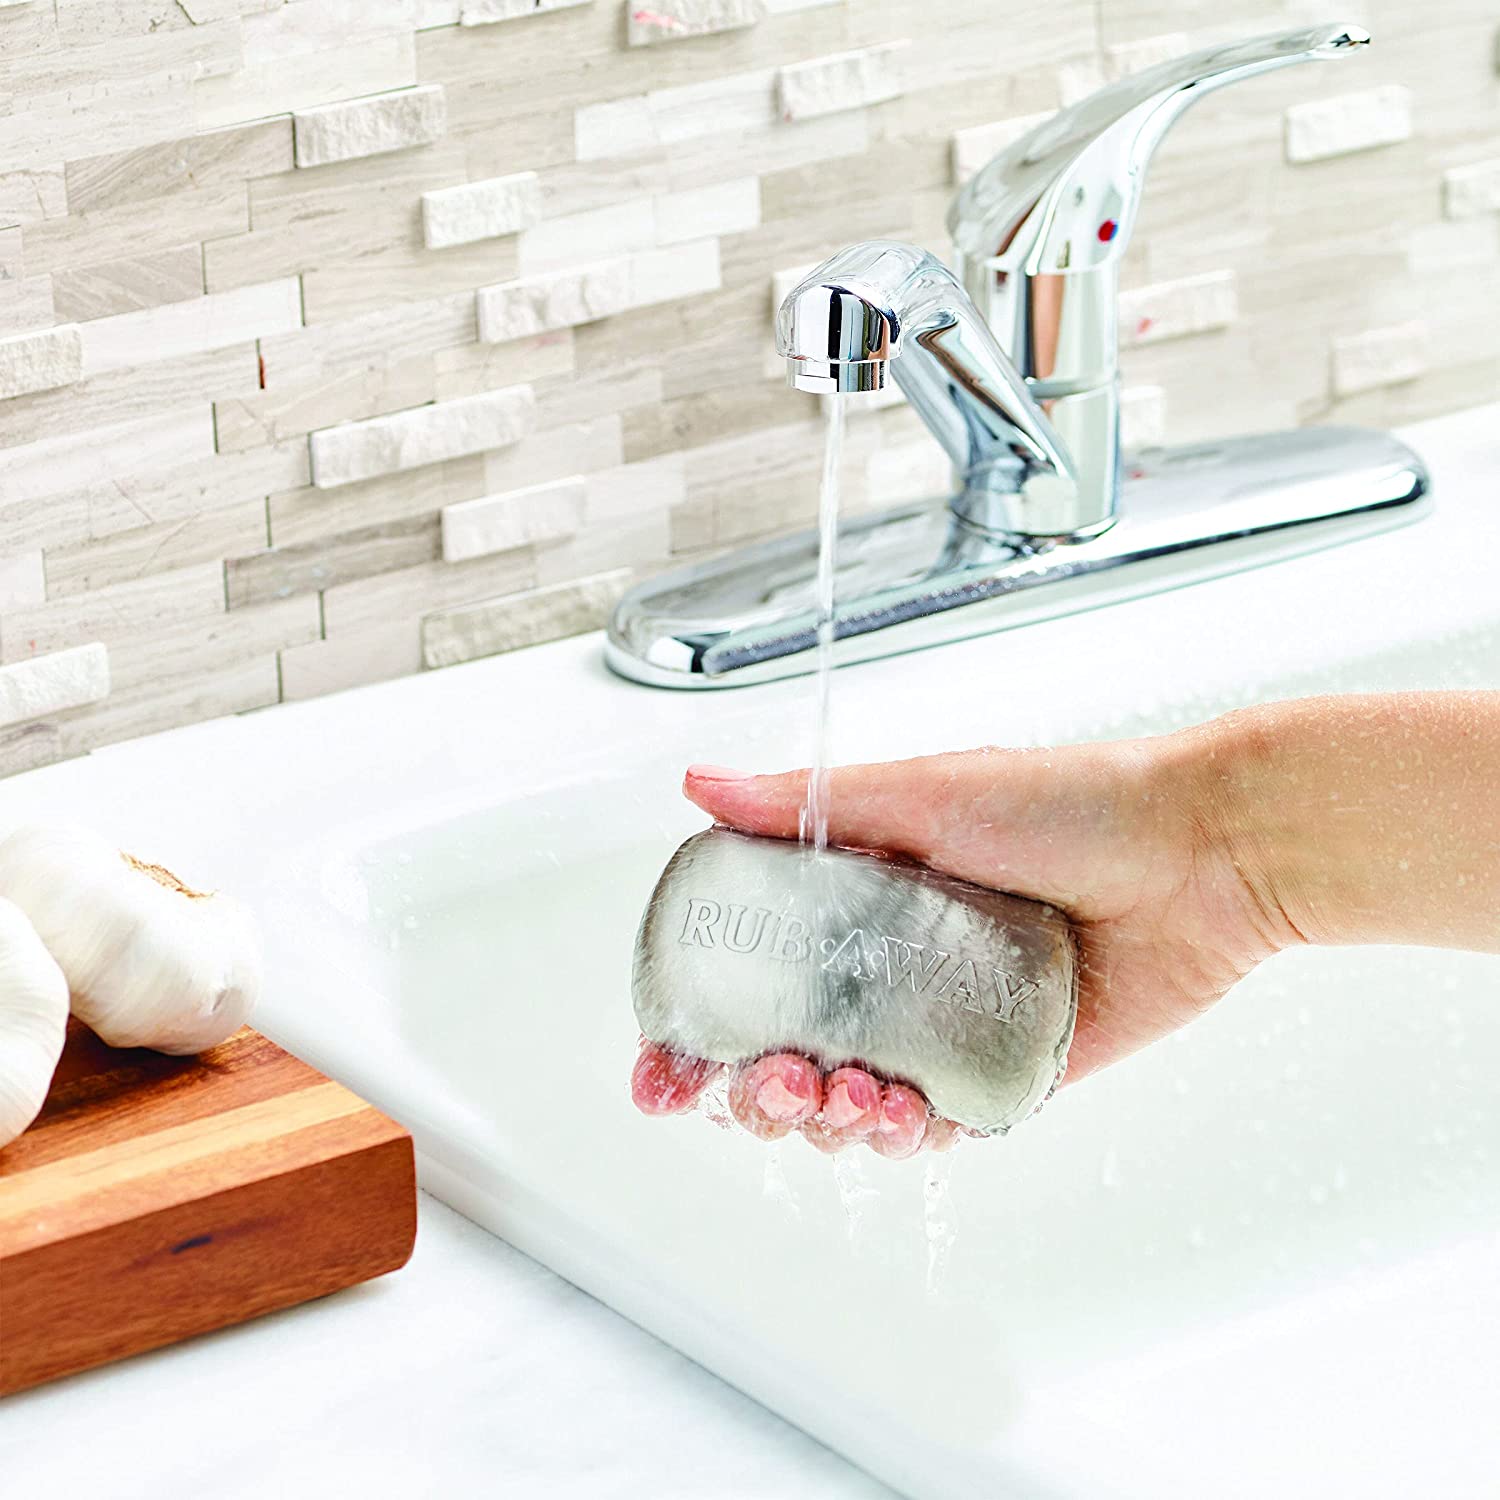 Stainless Steel Soap Hand Odor Remover Bar Great Stocking Stuffer 6 BARS